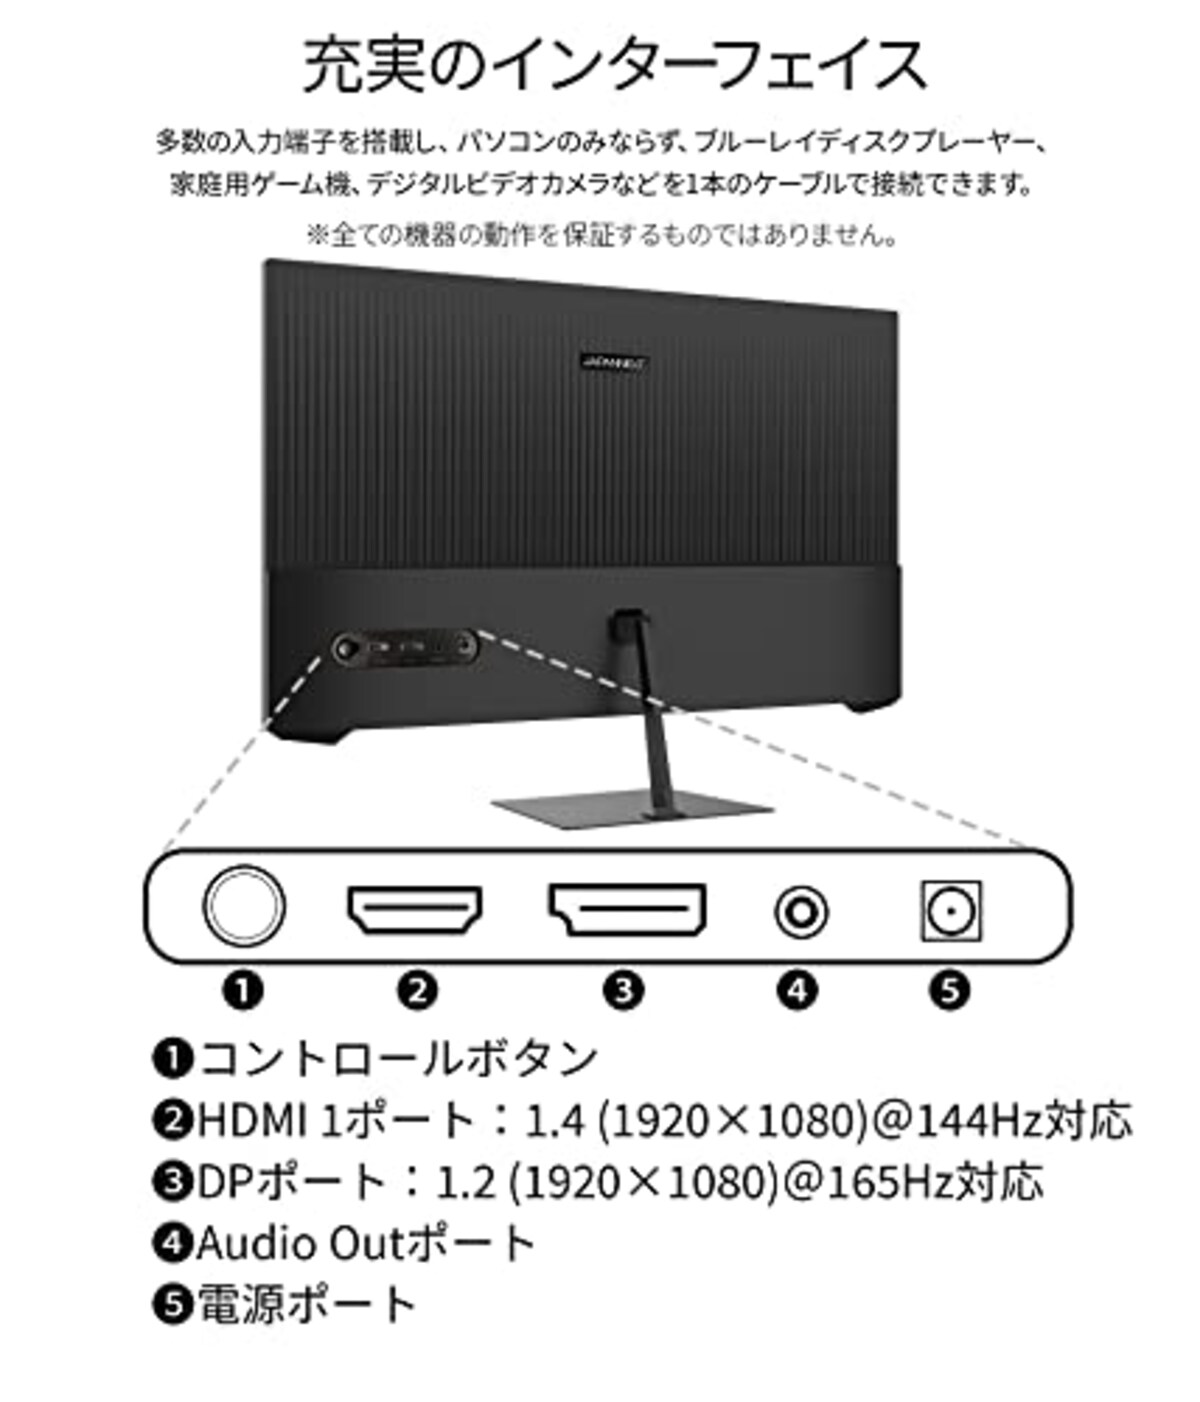  【Amazon.co.jp限定】JapanNext 27型 フルHDパネル搭載165Hz対応ゲーミングモニター JN-VG27FHD165 HDMI DP 165Hz 144Hz画像5 